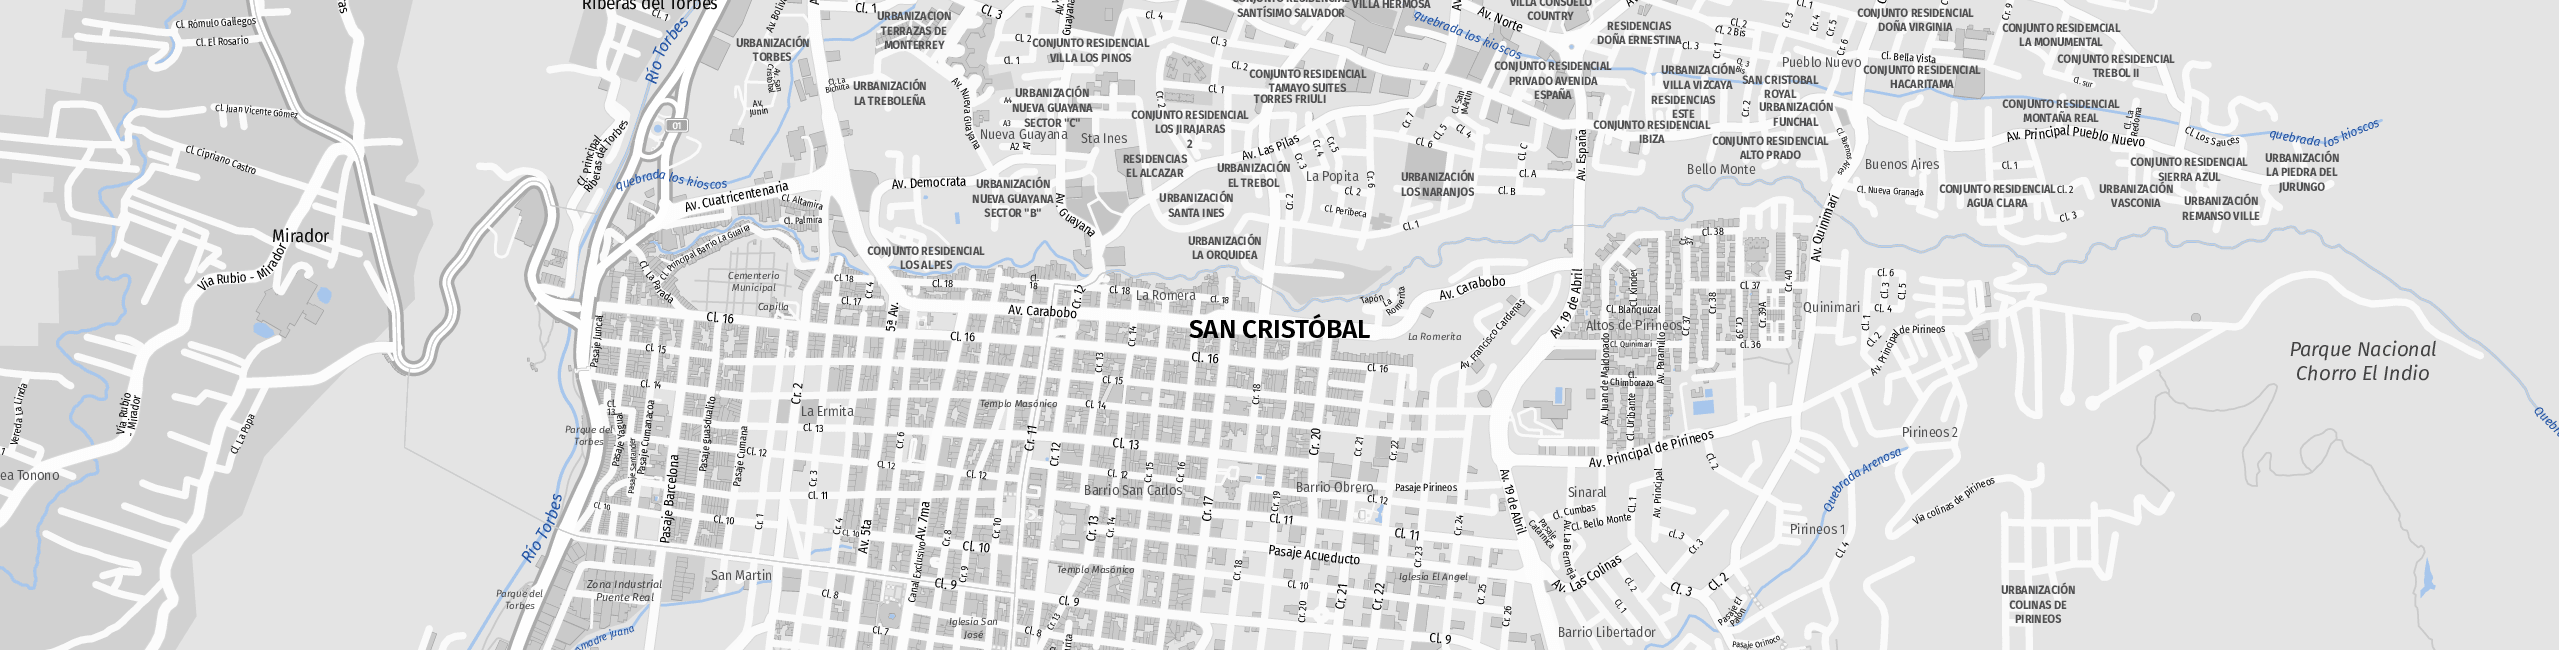 Stadtplan San Cristóbal zum Downloaden.